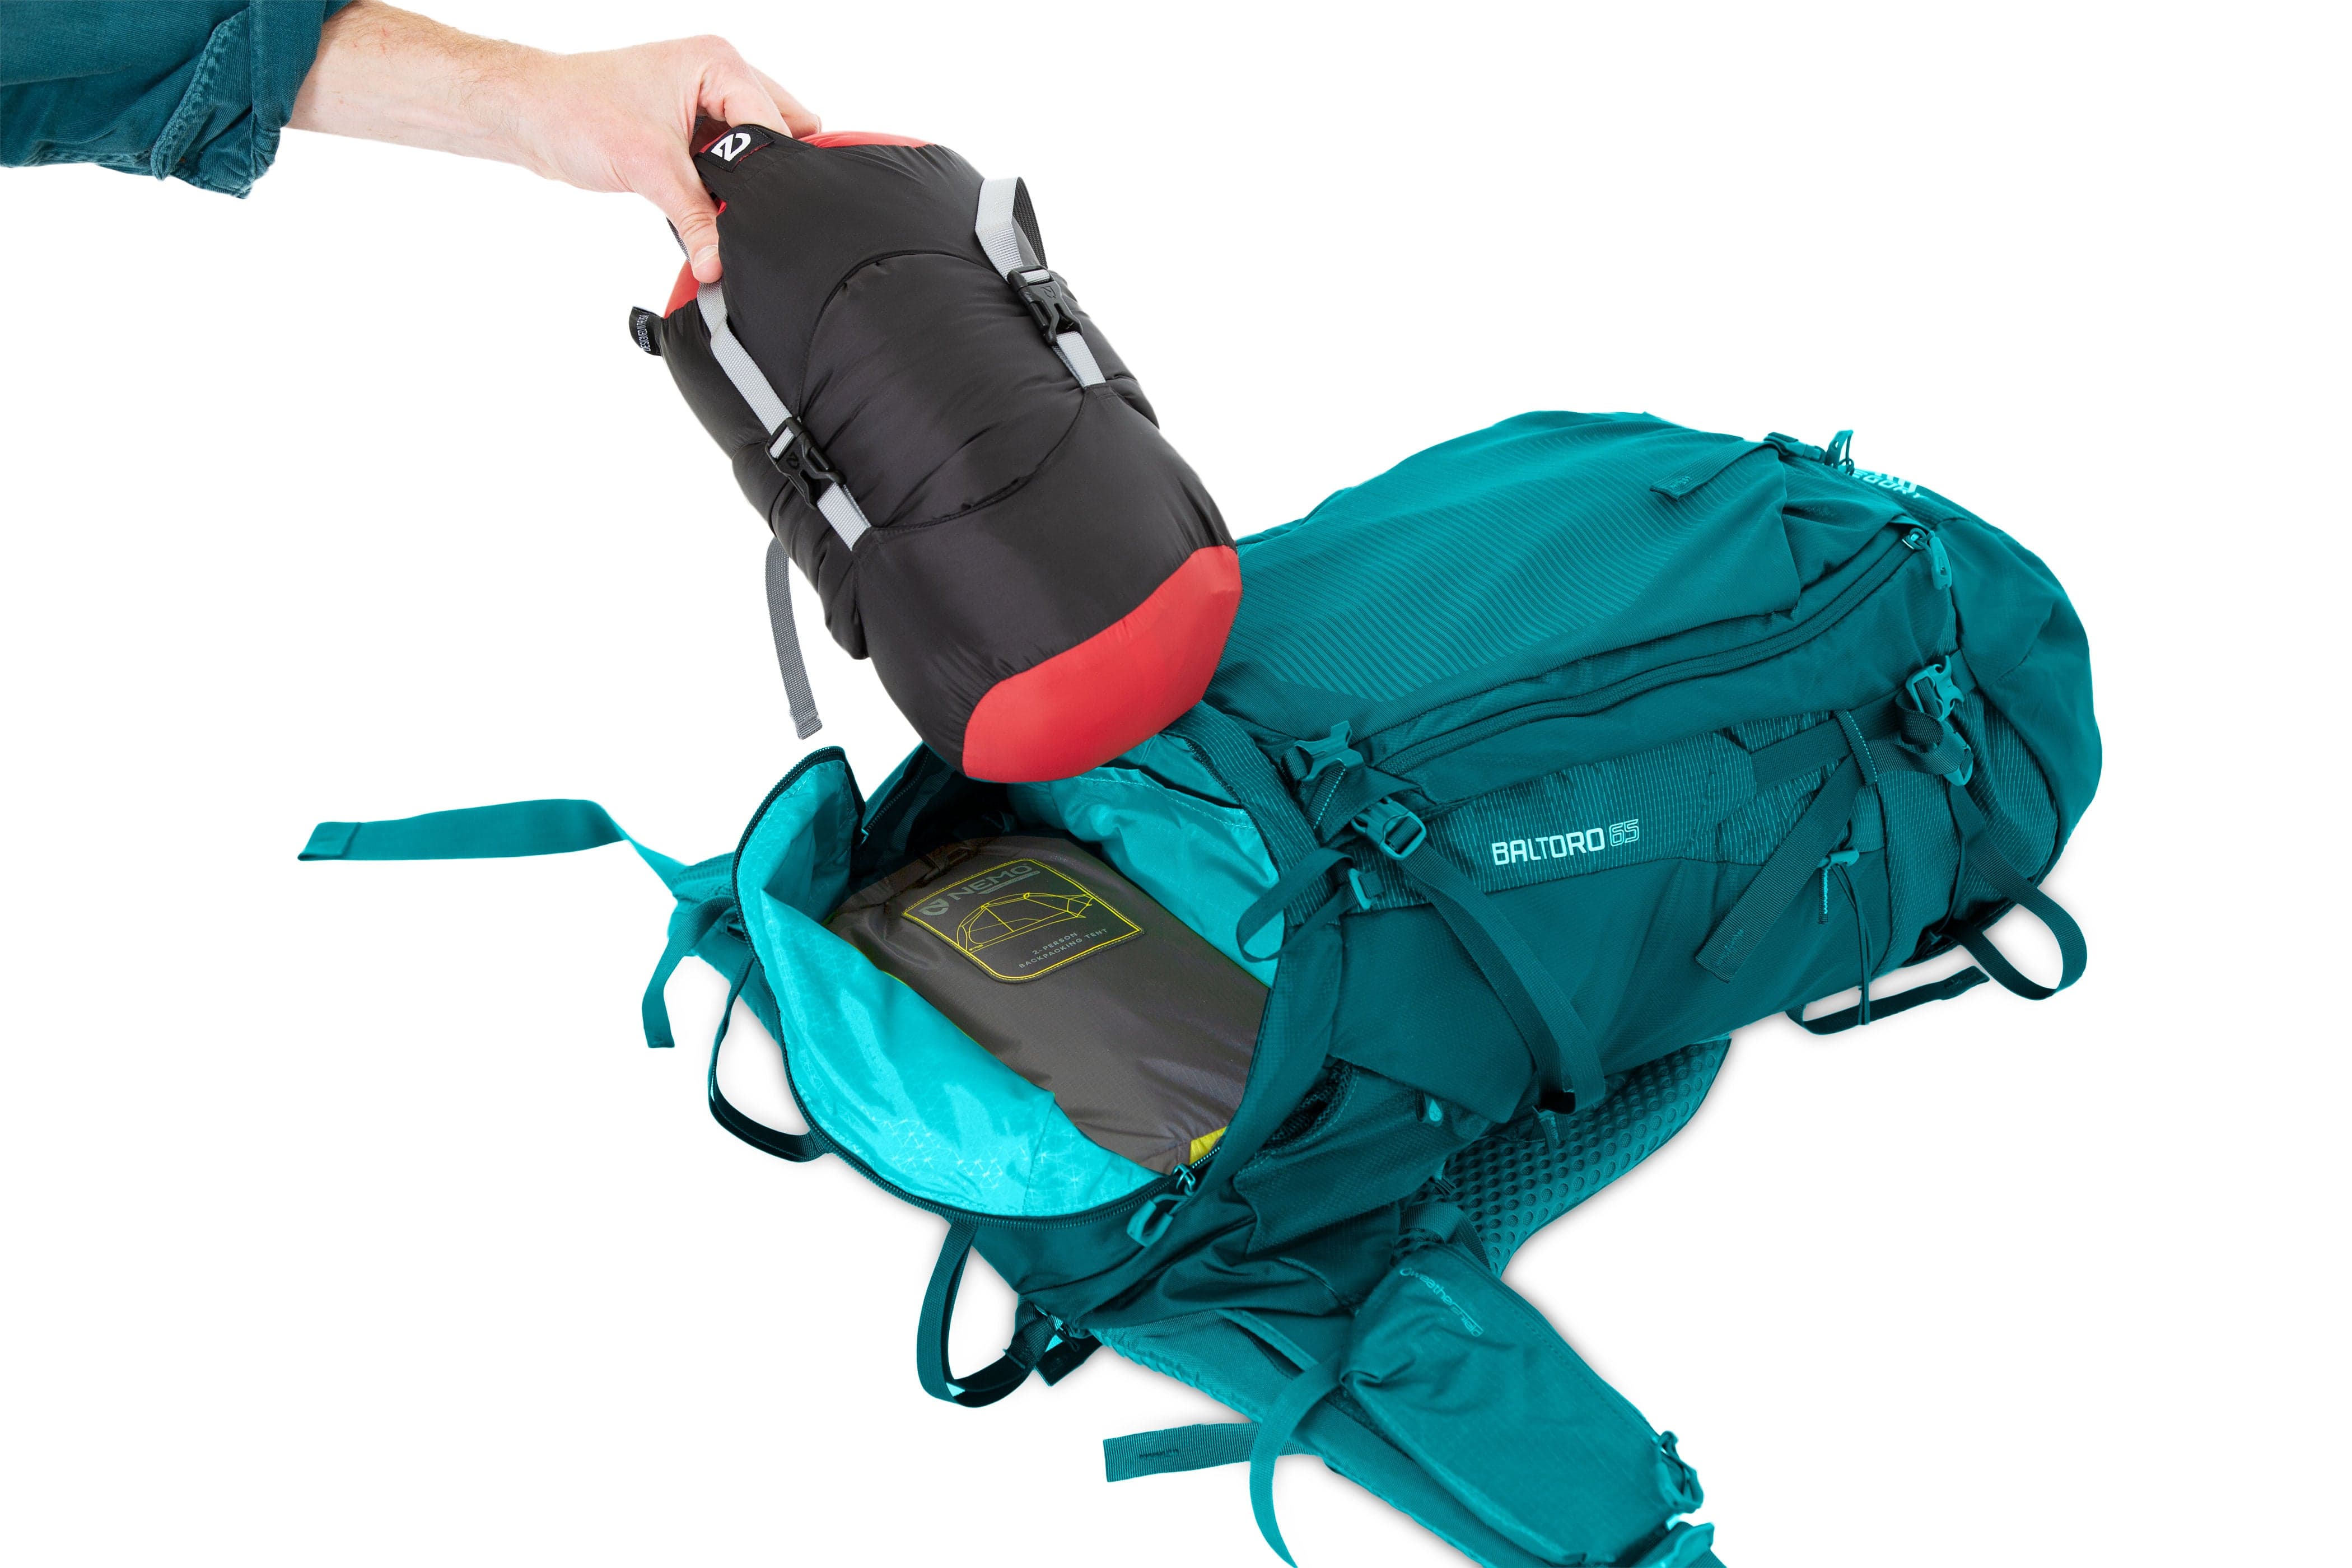 Nemo Tent Hornet OSMO Ultralight Backpacking Tent (Updated)